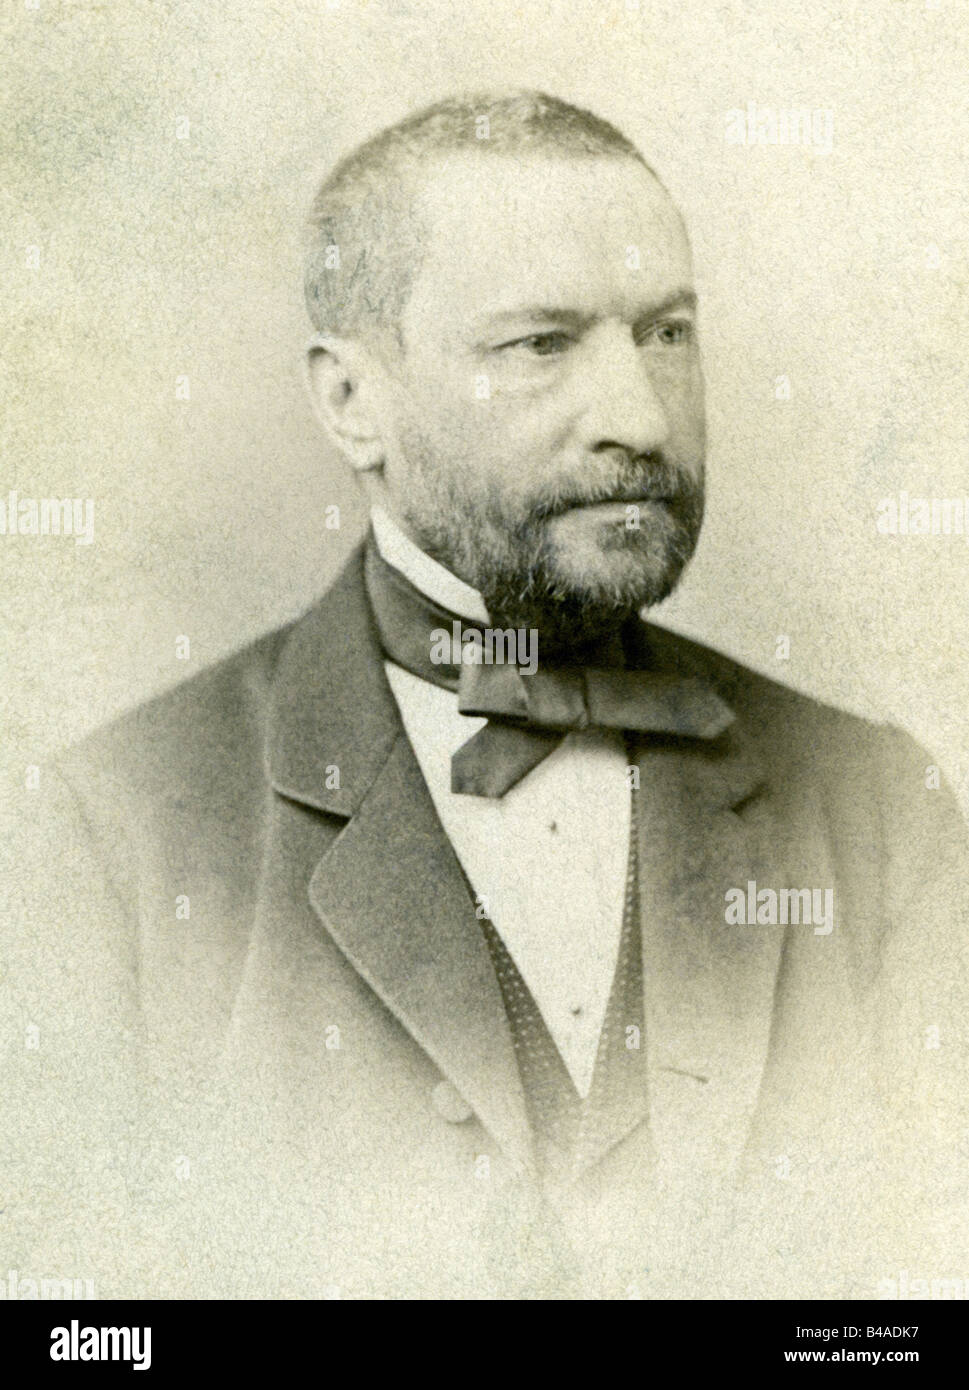 Eulenburg, Friedrich Albrecht Graf zu, 29.6.1815 - 2.6.1881, Prussian statesman, portrait, photograph, Germany, 19th century, Stock Photo